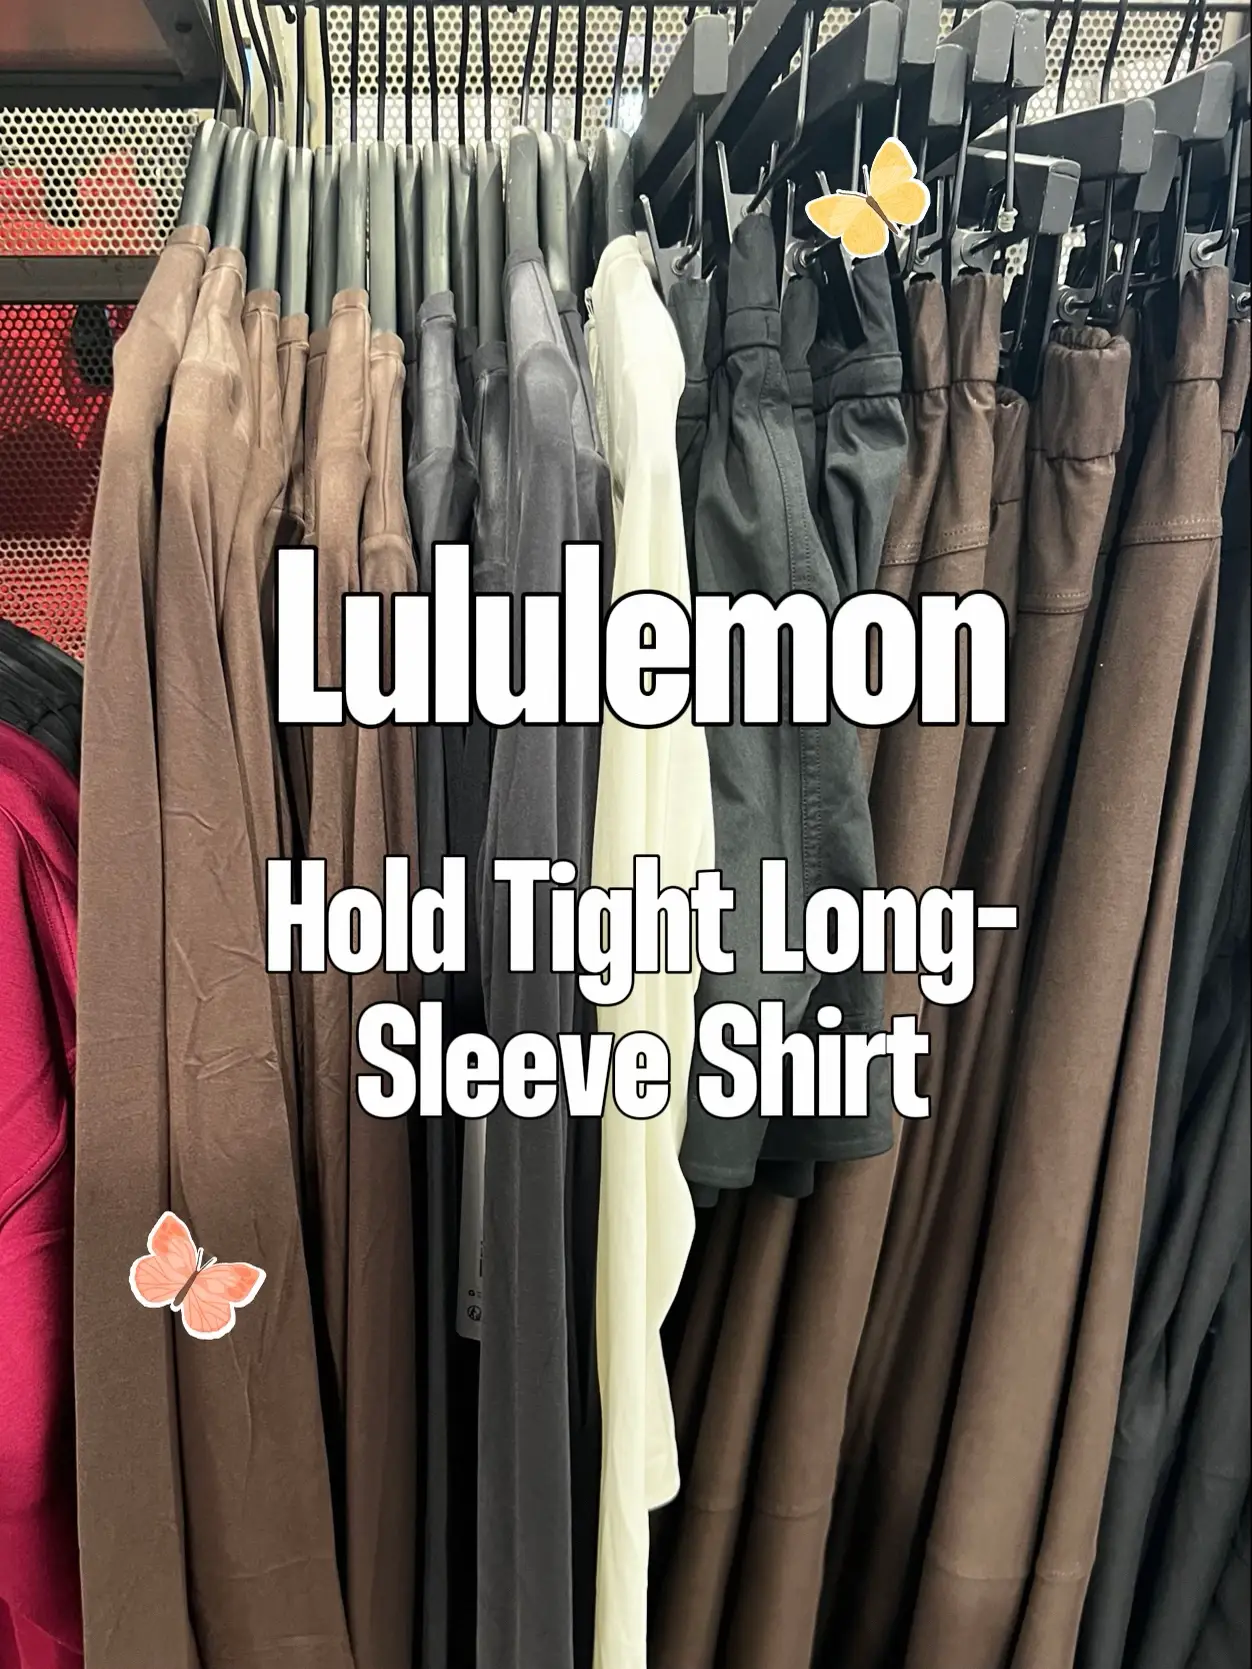 lululemon Women's Hold Tight Long-Sleeve Shirt, Sunlight Yellow Size 8, Compare